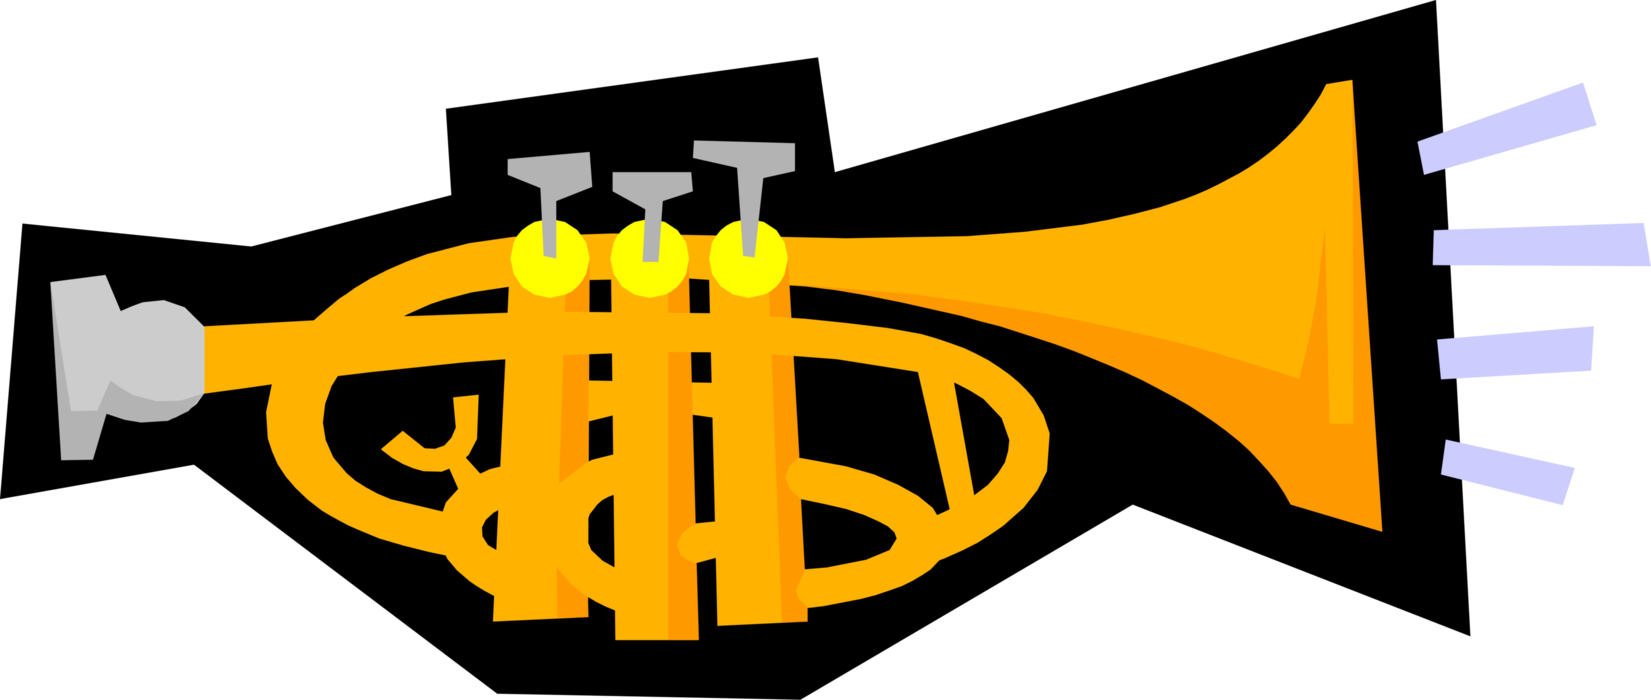 Vector Illustration of Harp Stringed Musical Instruments